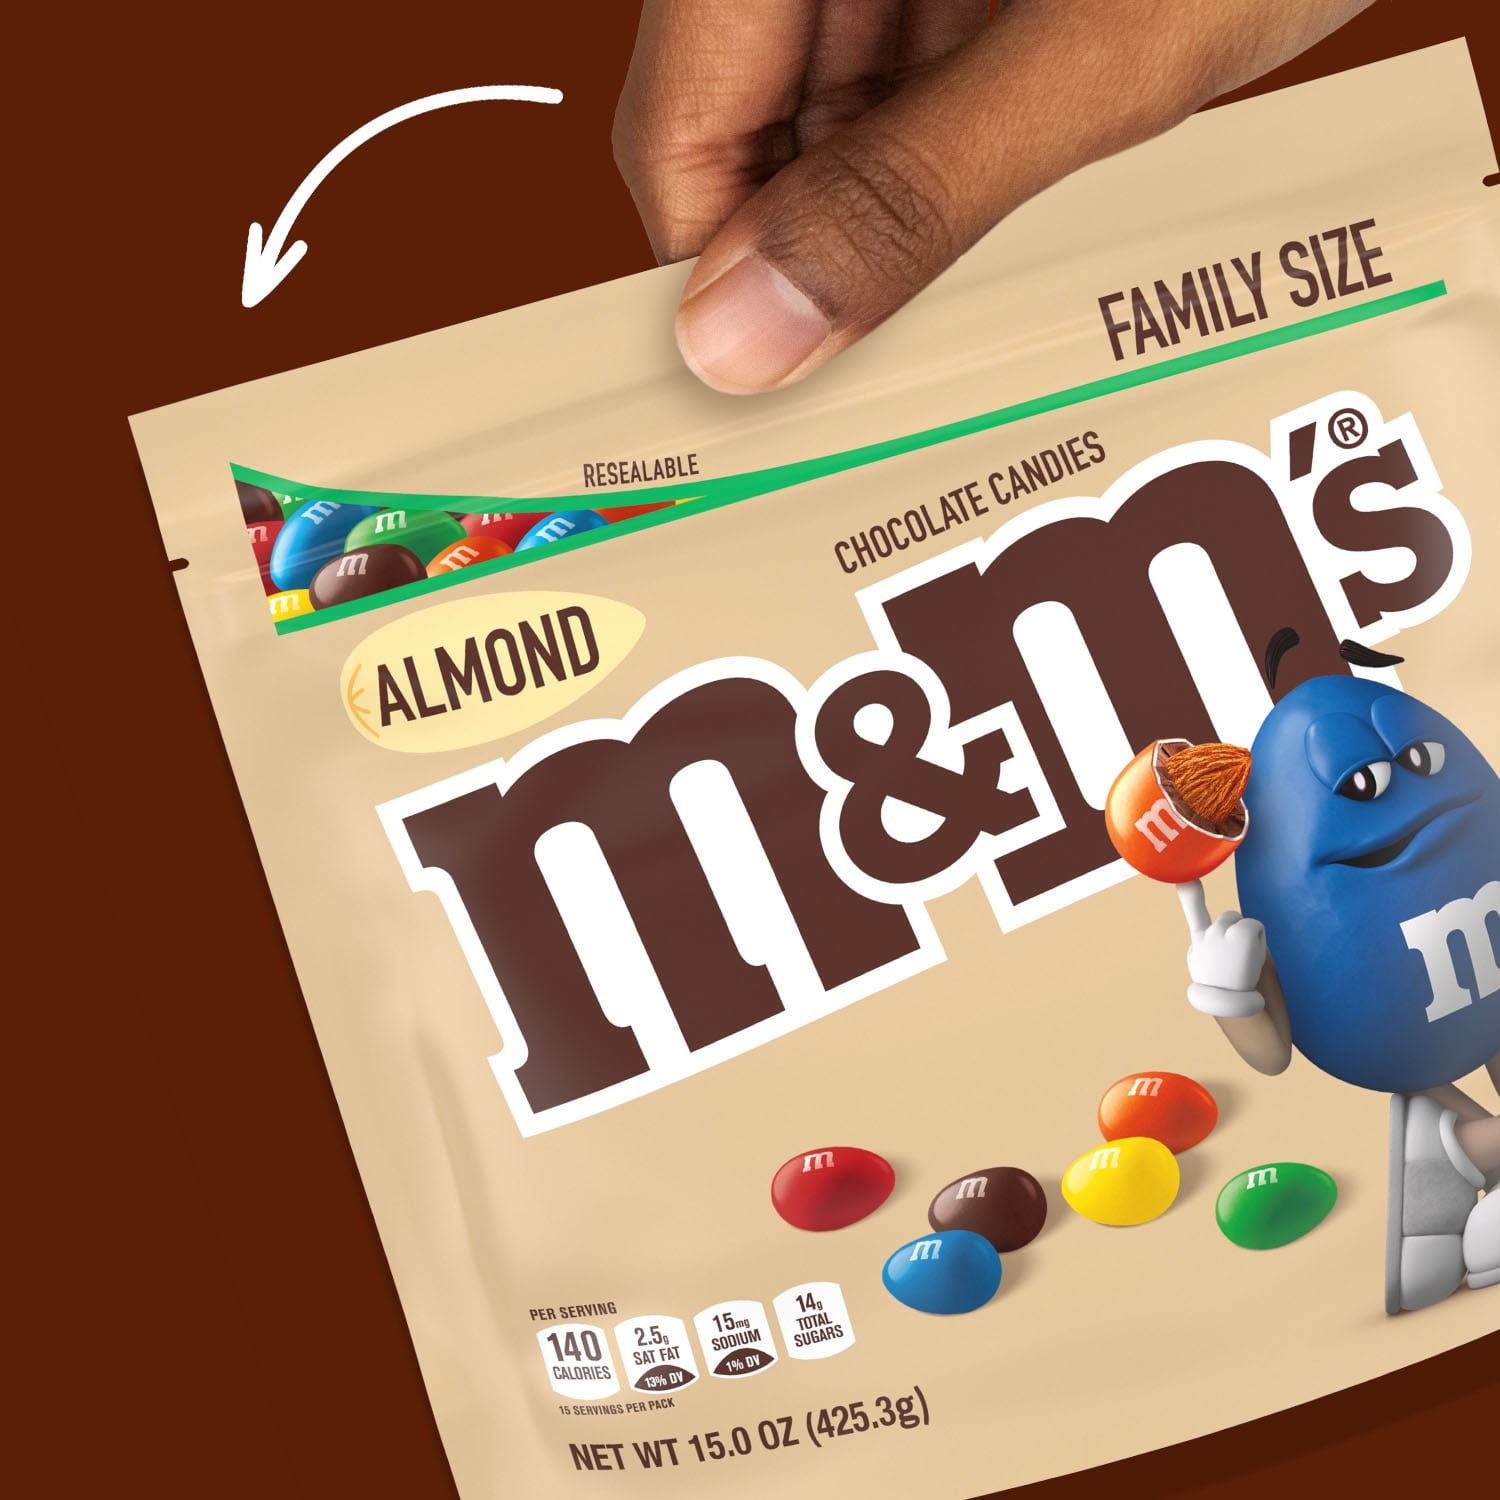 m&m dark chocolate almond